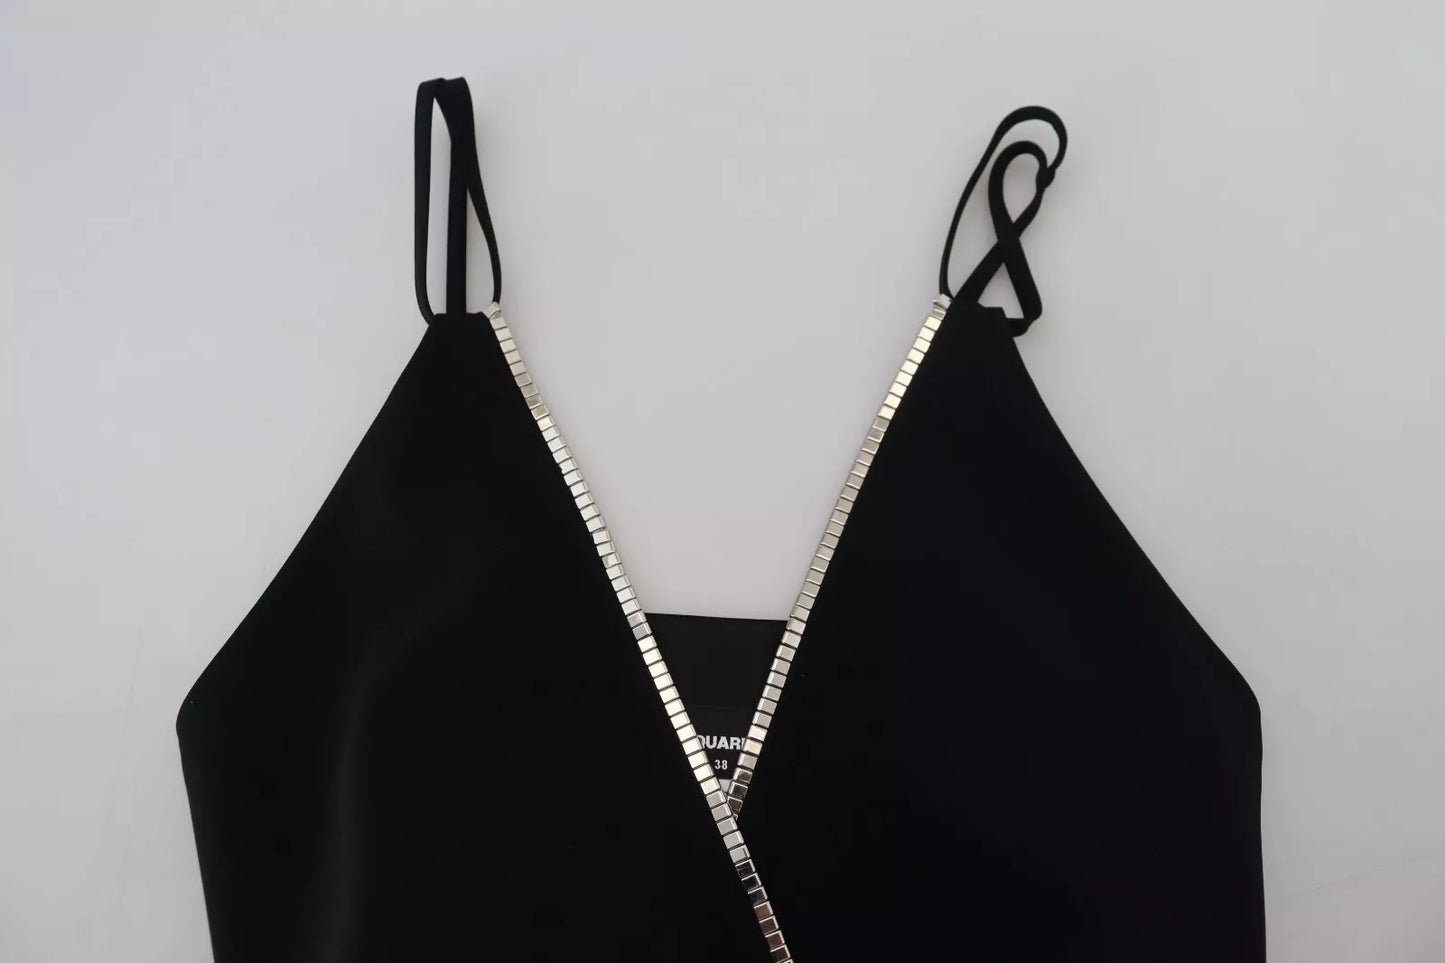 Black Embellished Sleeveless V-neck Jumpsuit Dress